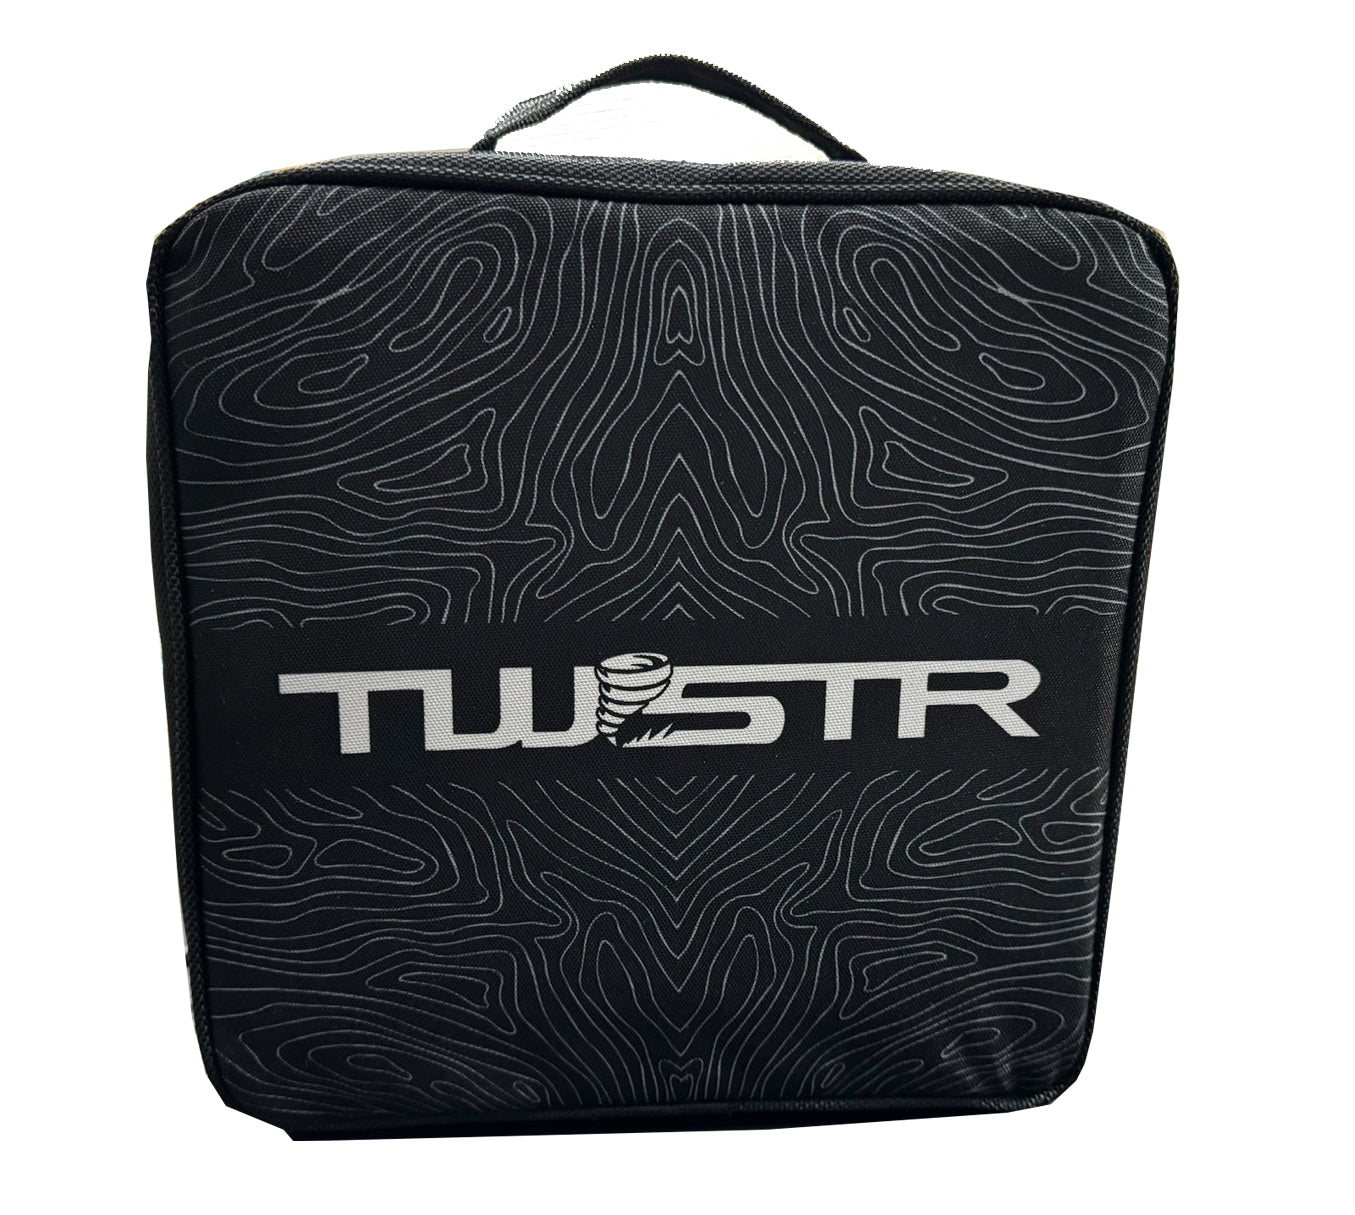 TWSTR x BK Loader Case - TWSTR Edition [PREORDER]